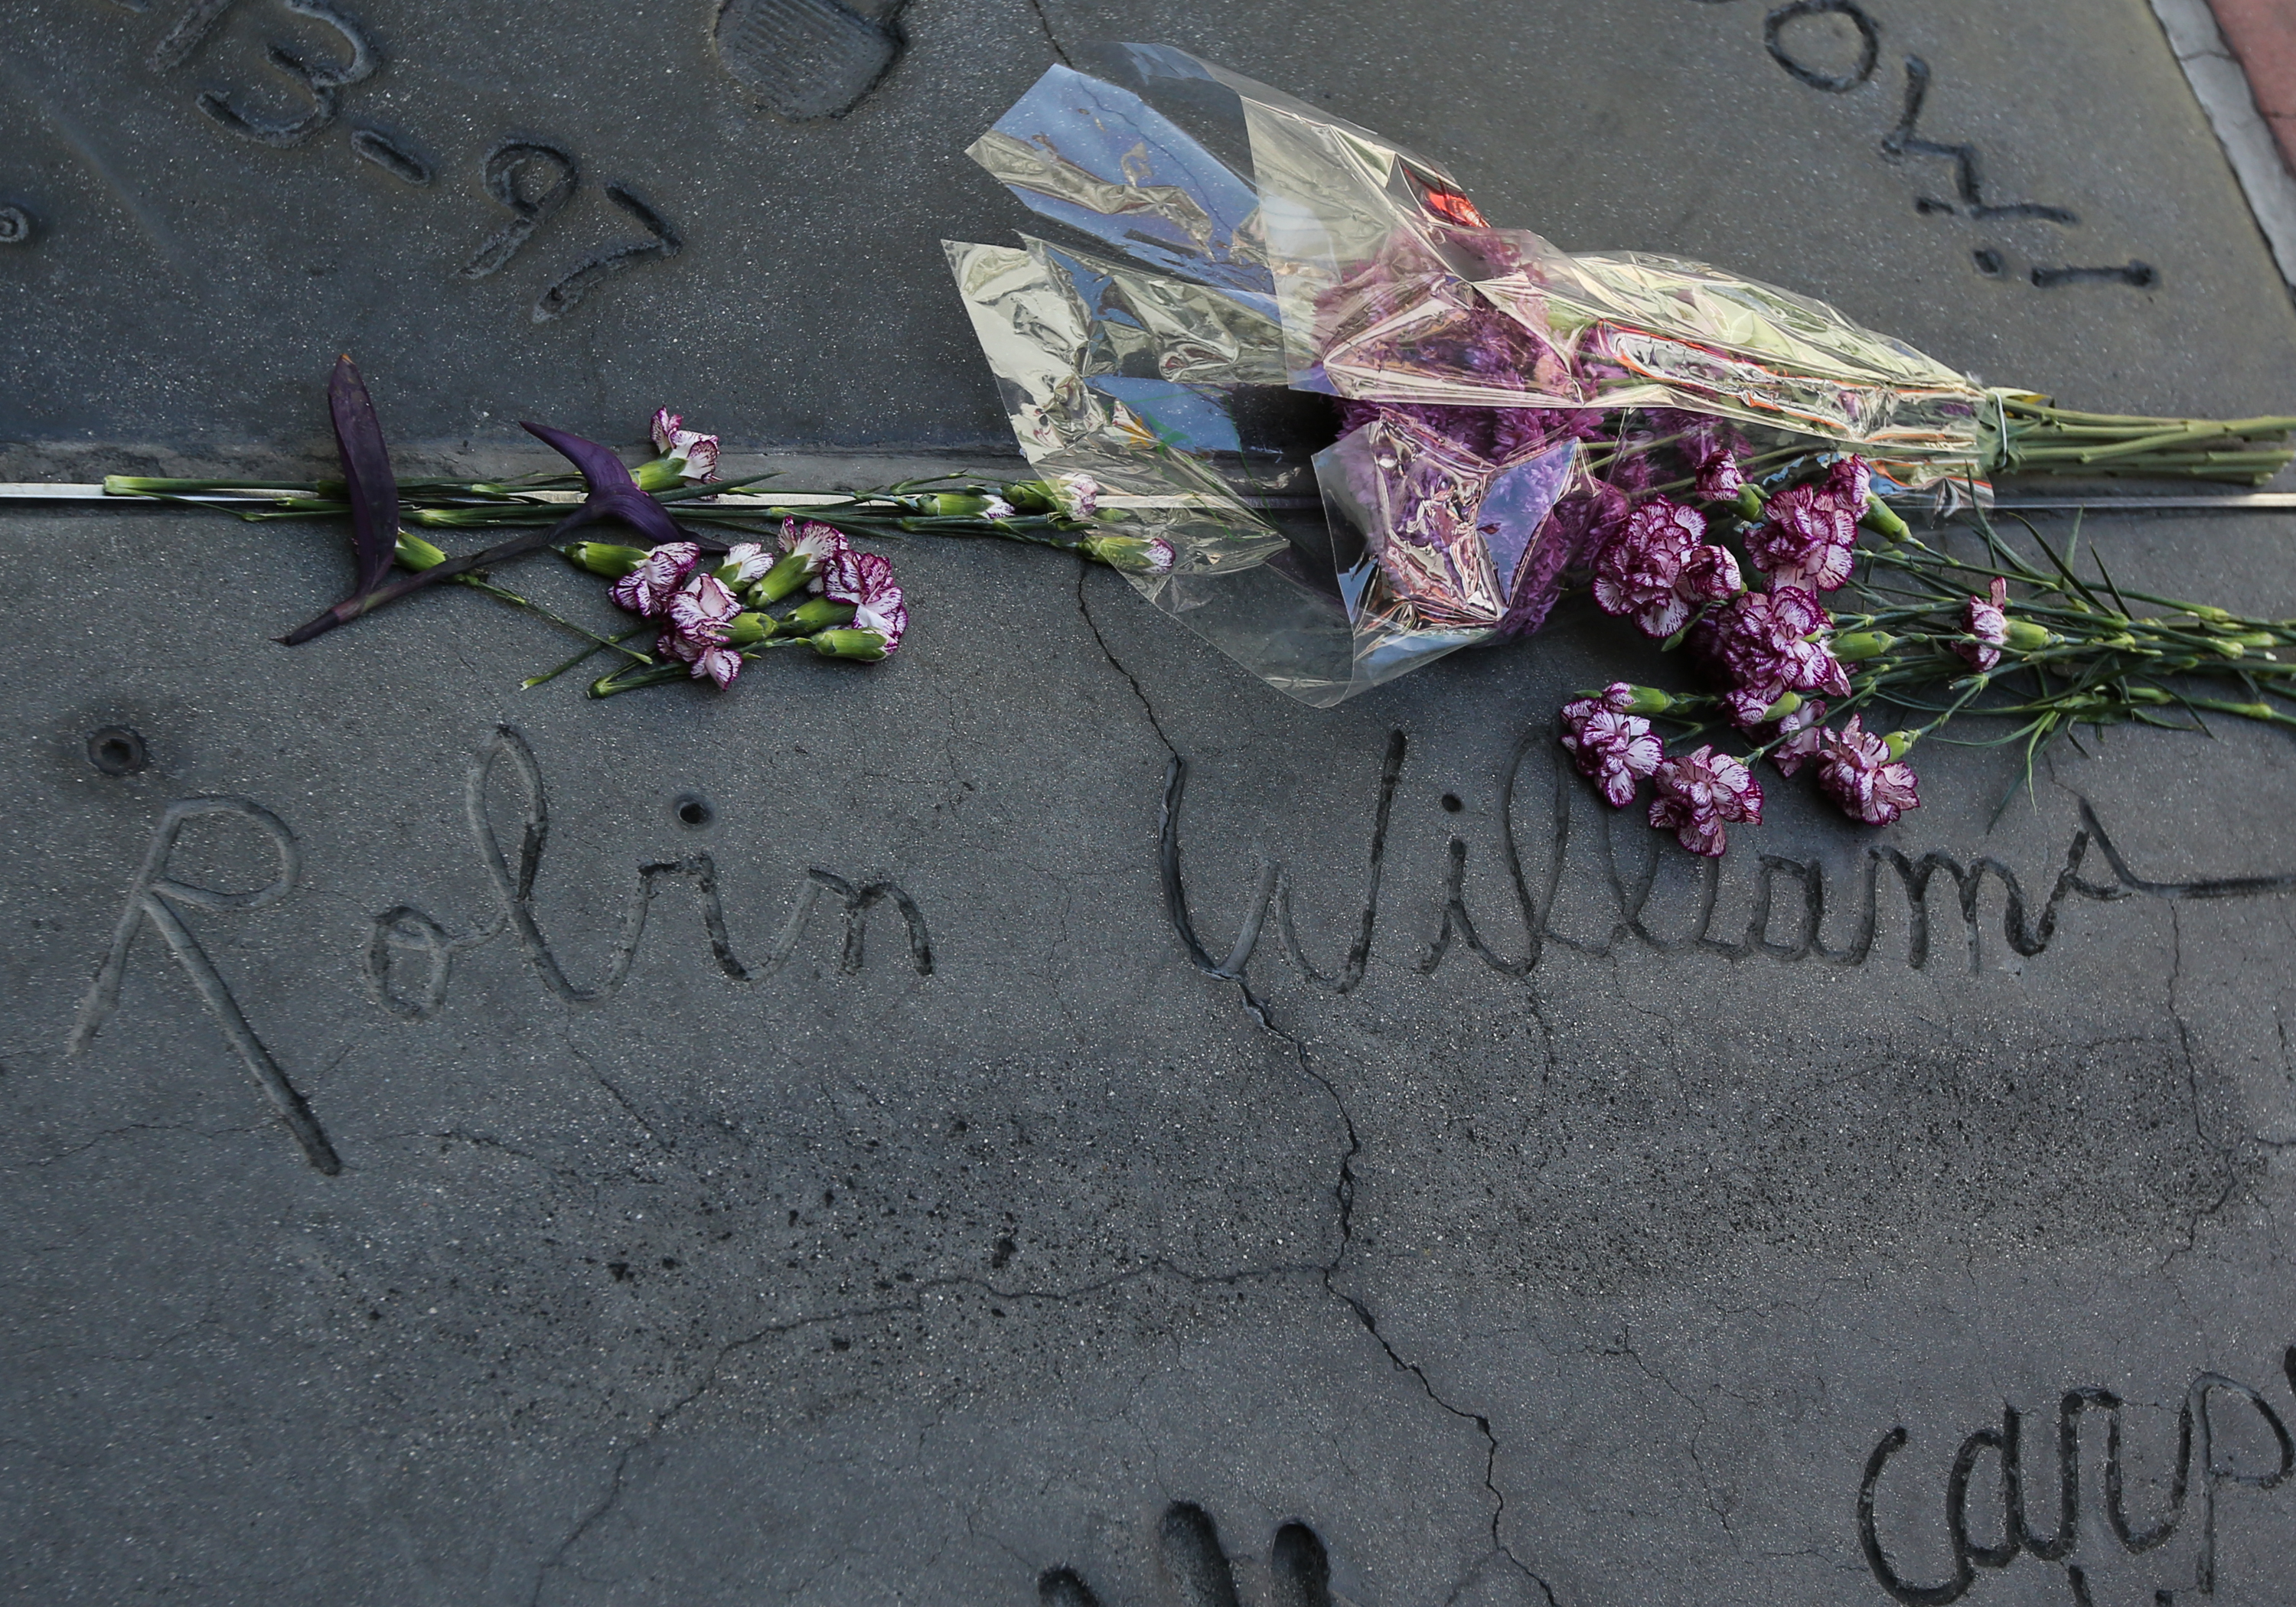 Sad Goodbye: Where Robin Williams once stood, flowers now lay